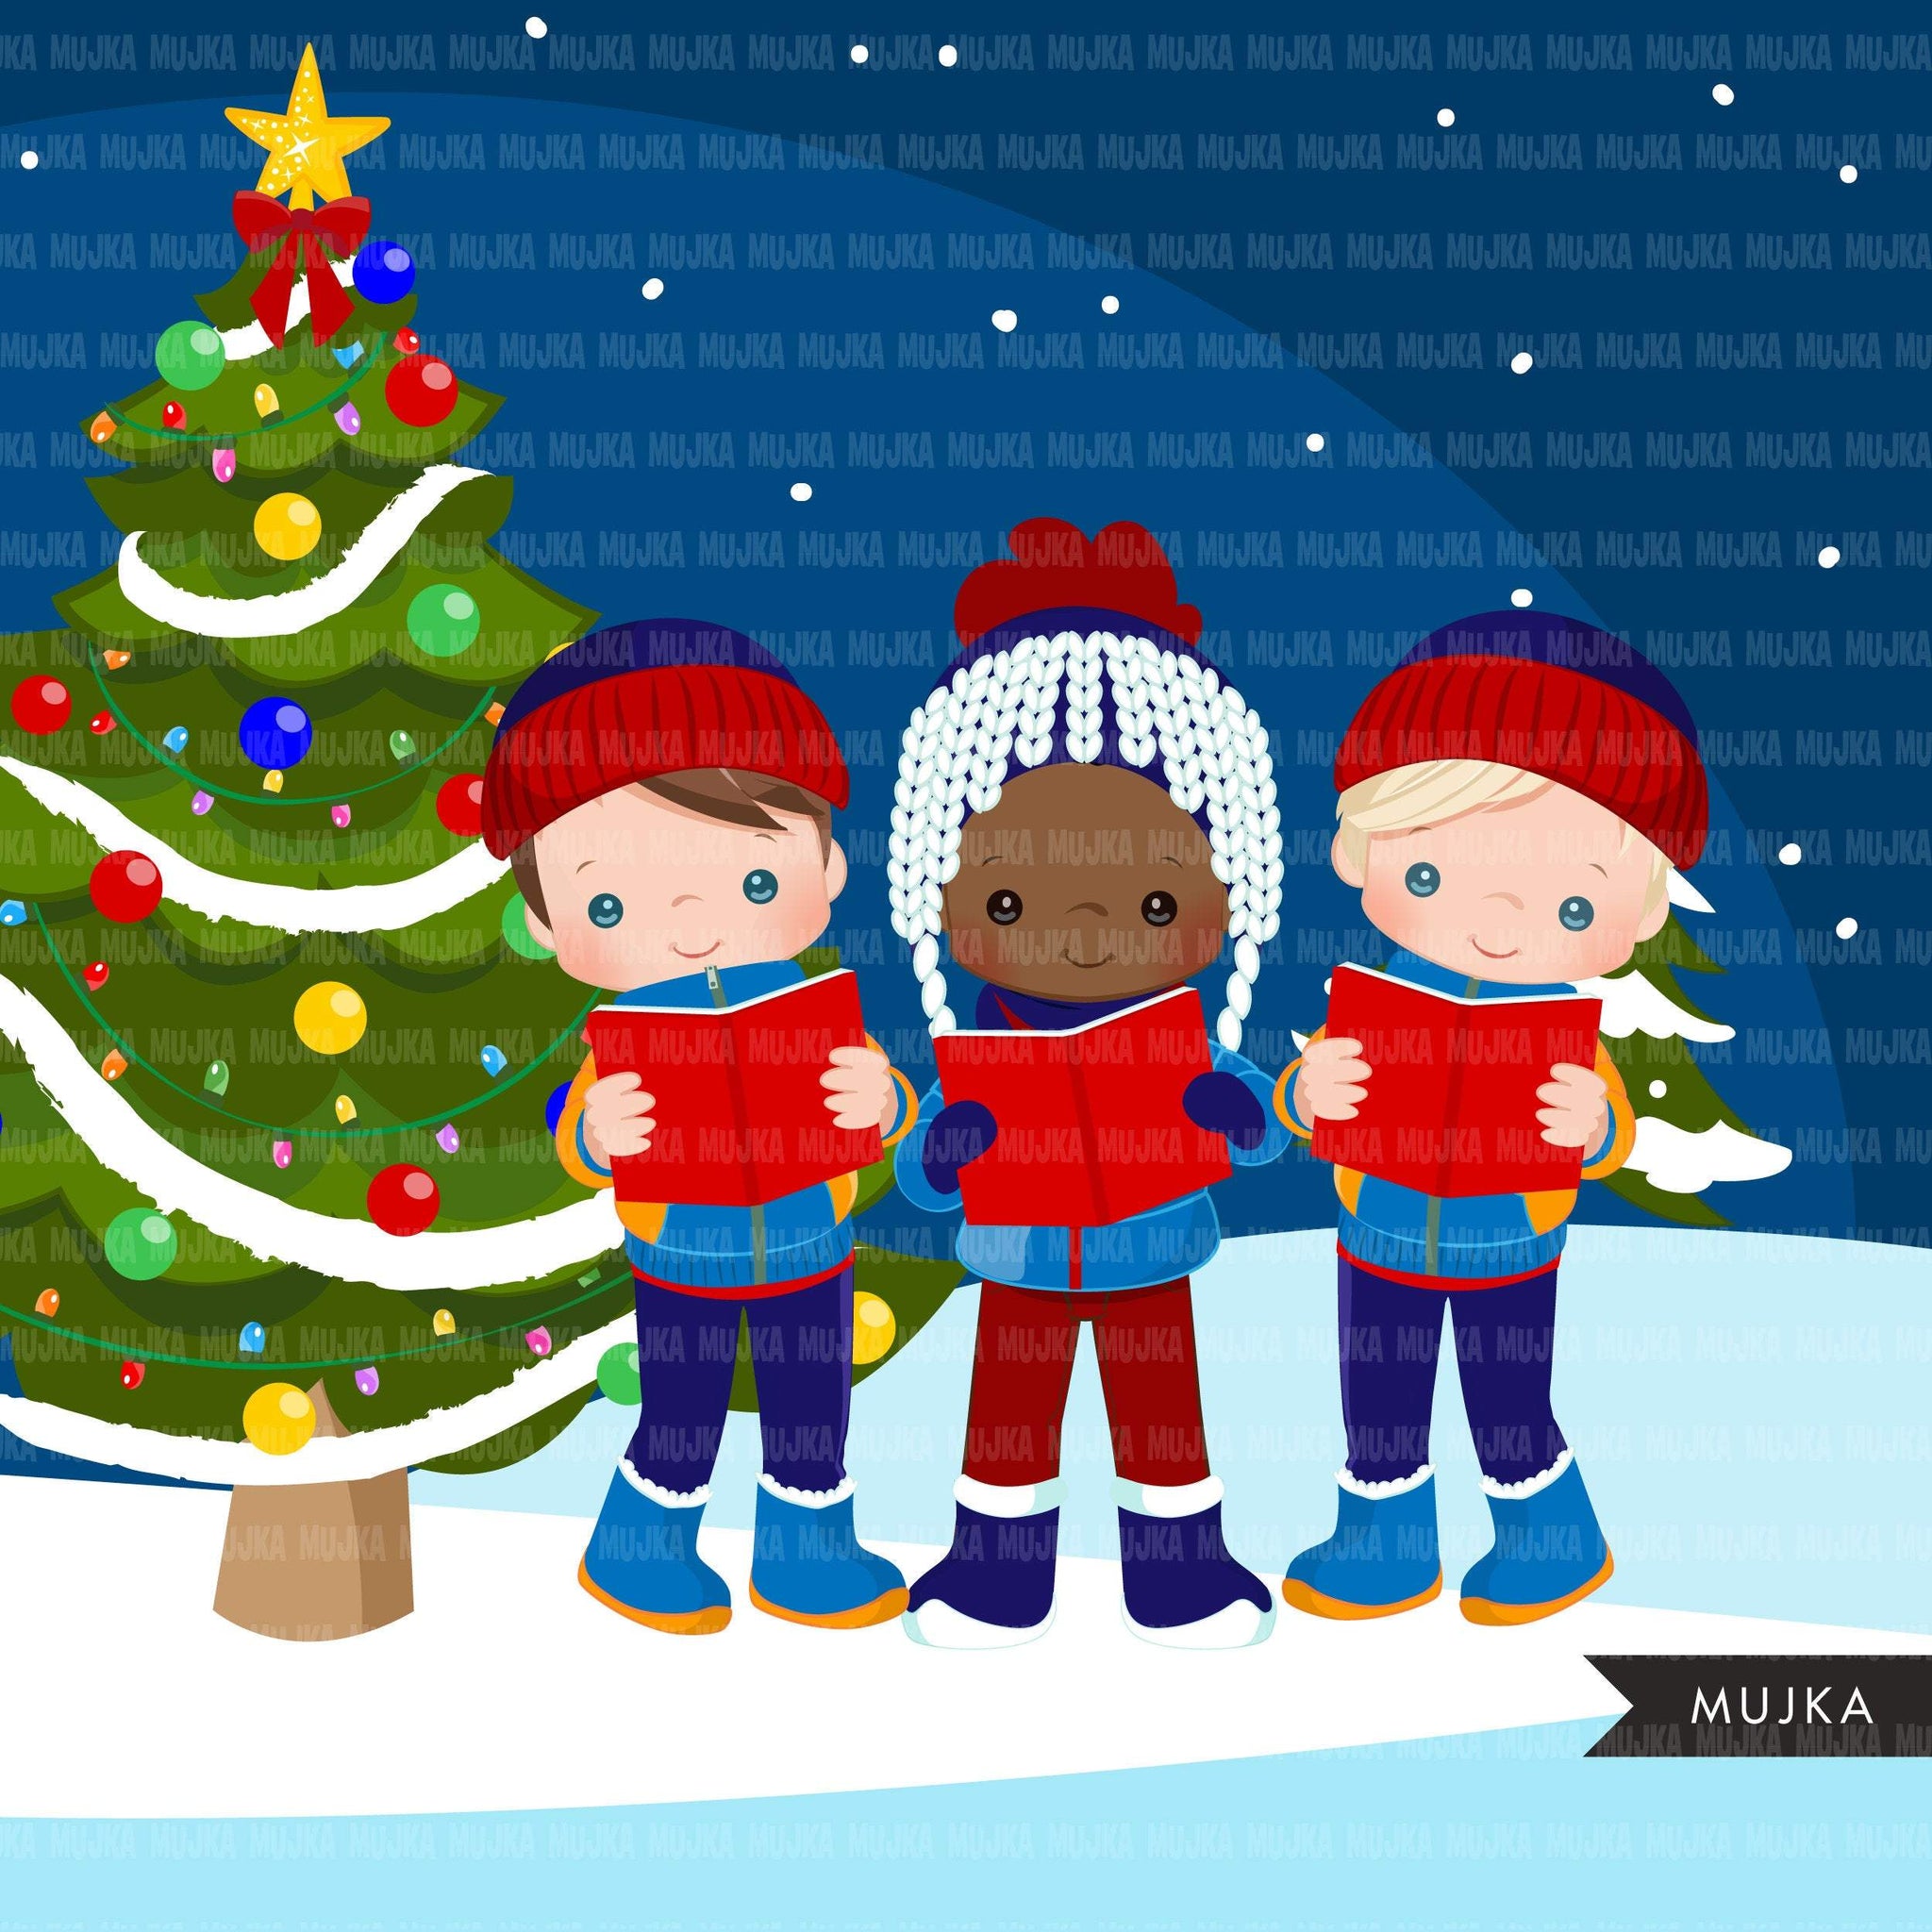 Christmas Carol clipart, Christmas caroler boy, black boy, Christmas tree, holiday png clip art, commercial use sublimation graphics